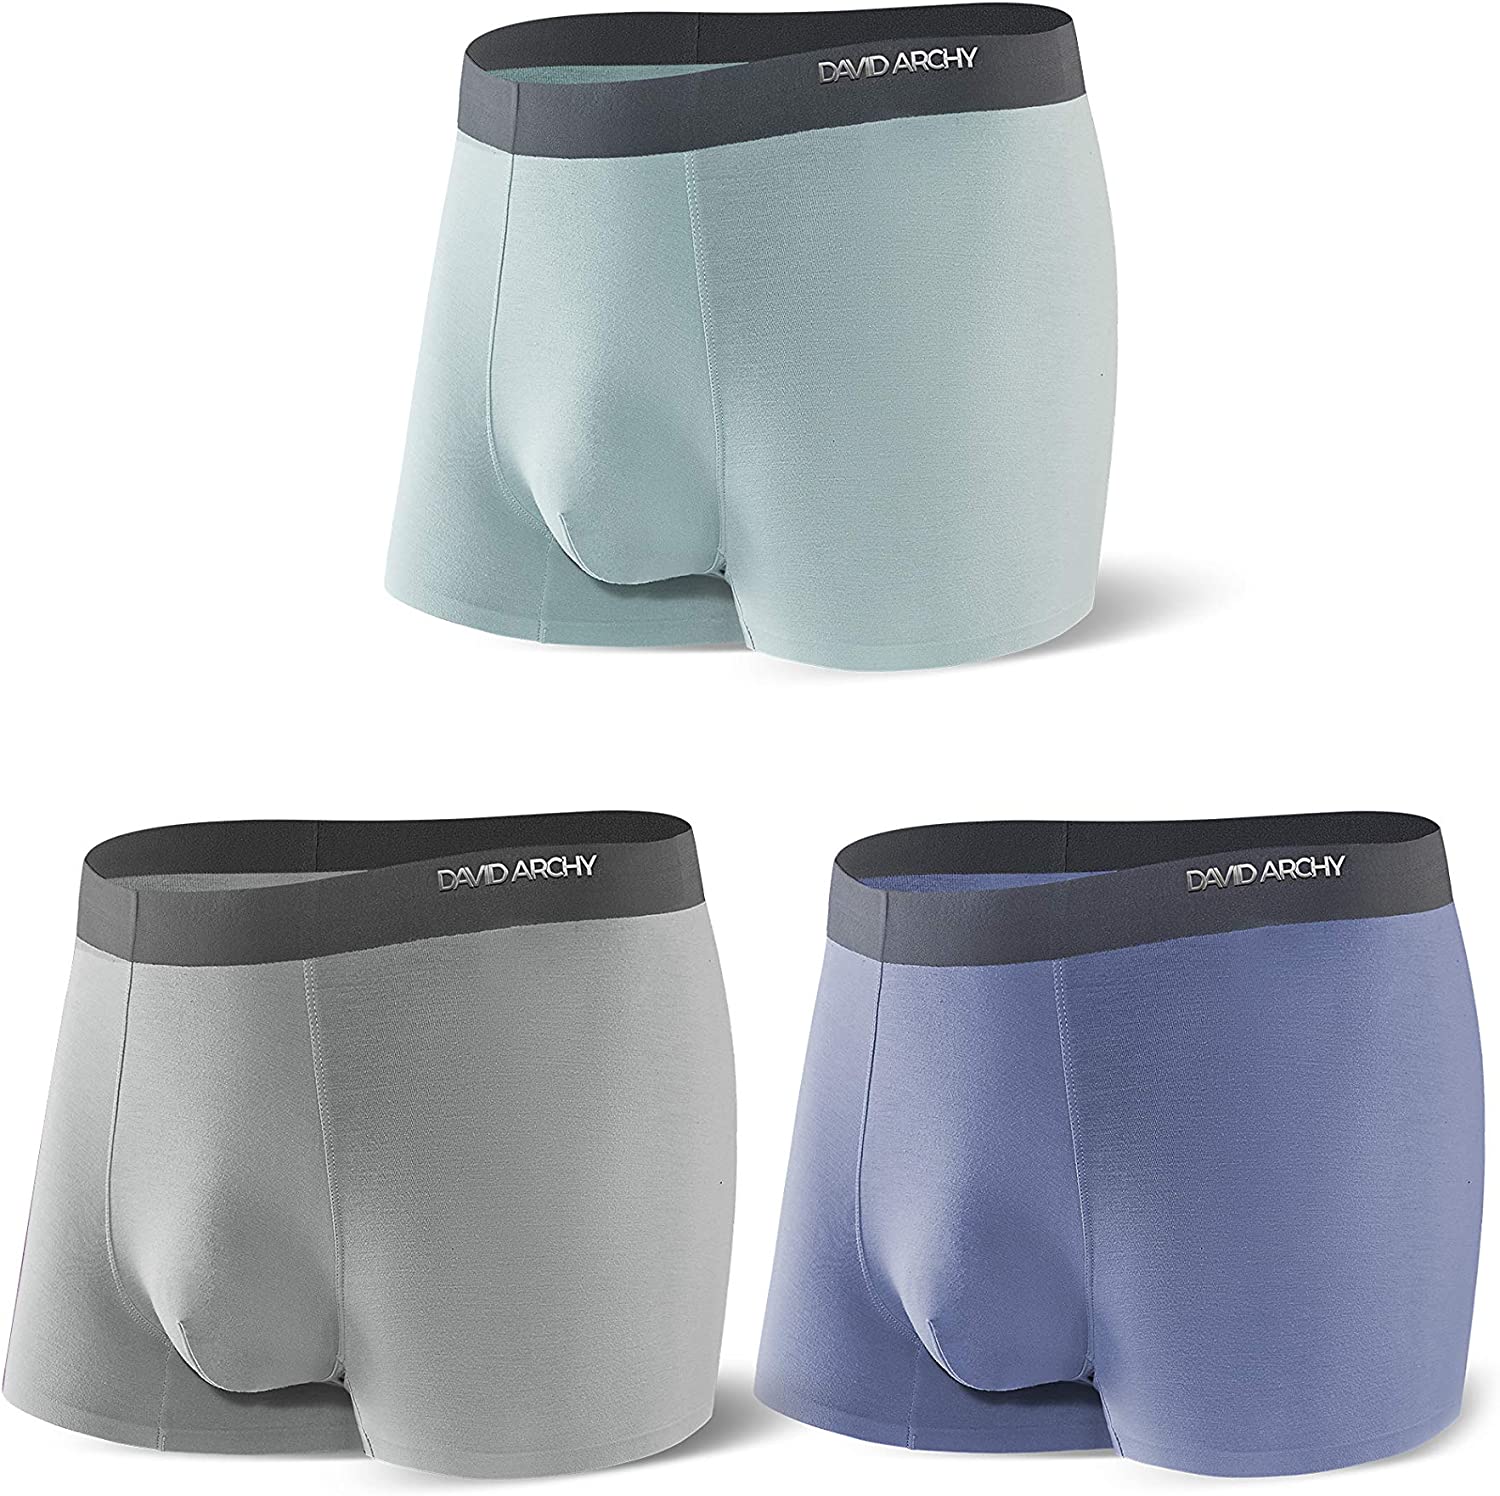 DAVID ARCHY Men's Seamless Underwear Ultra Soft Micro Modal Trunks